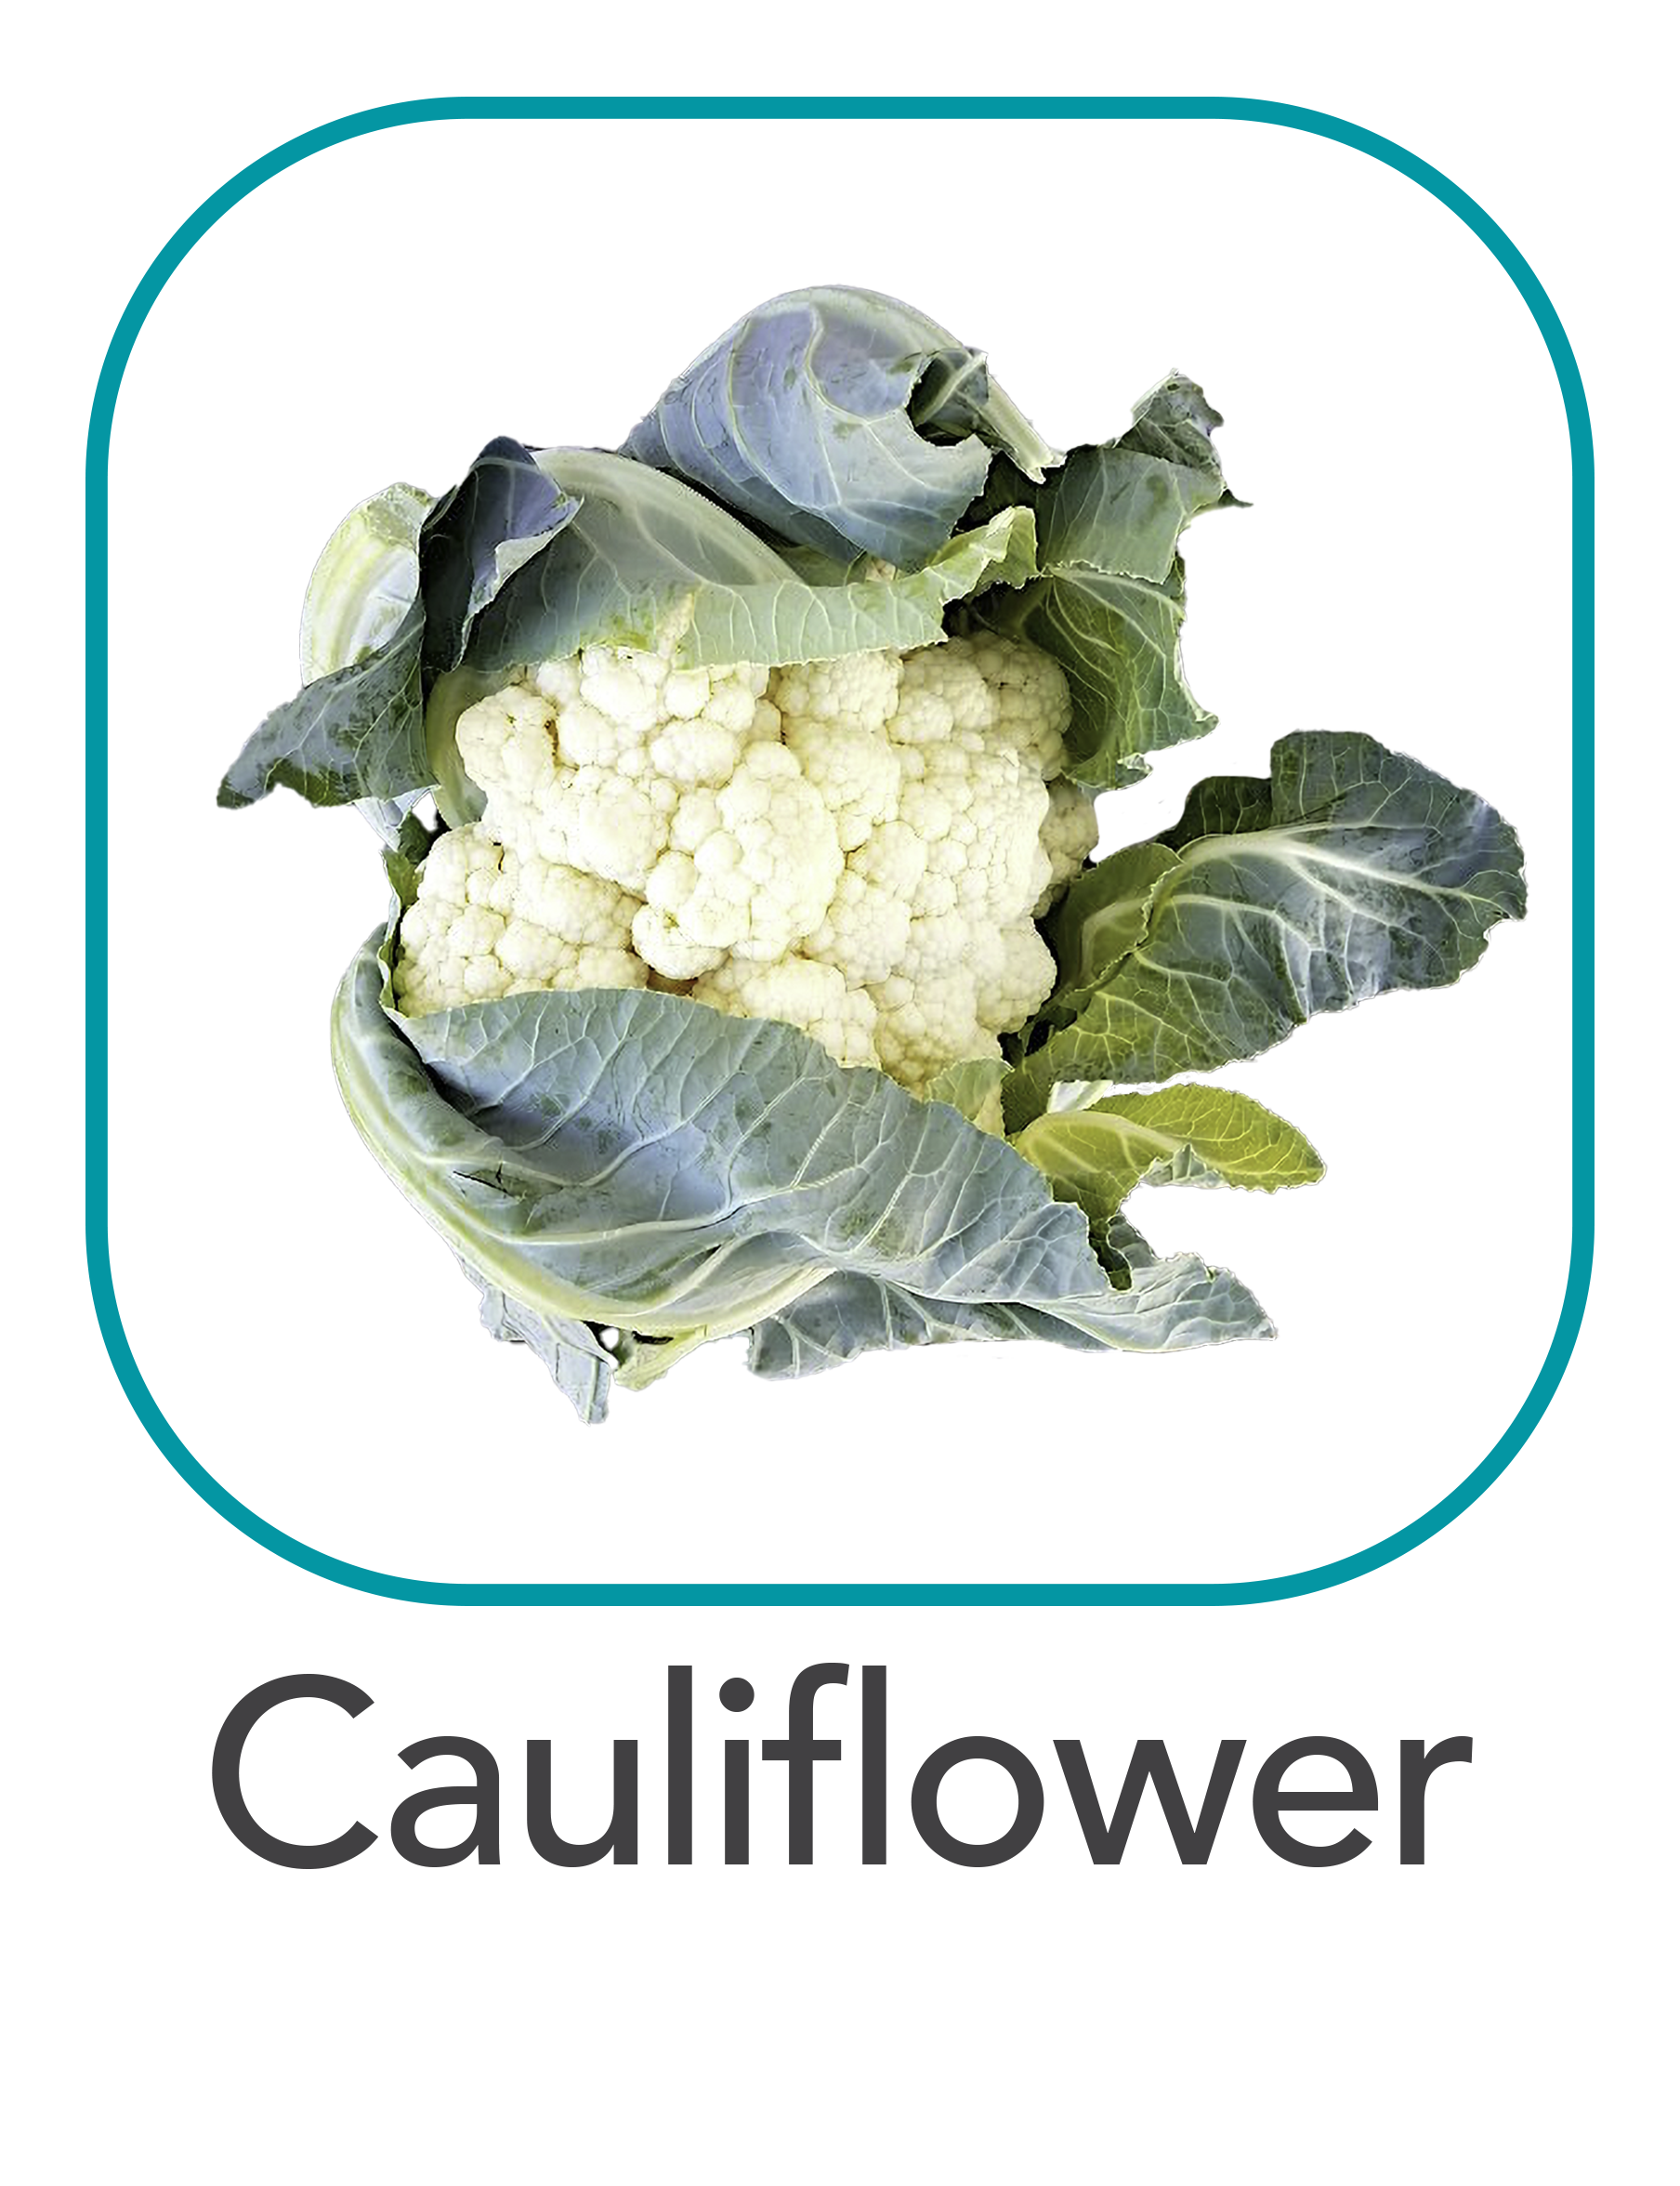 cauliflower_web.png